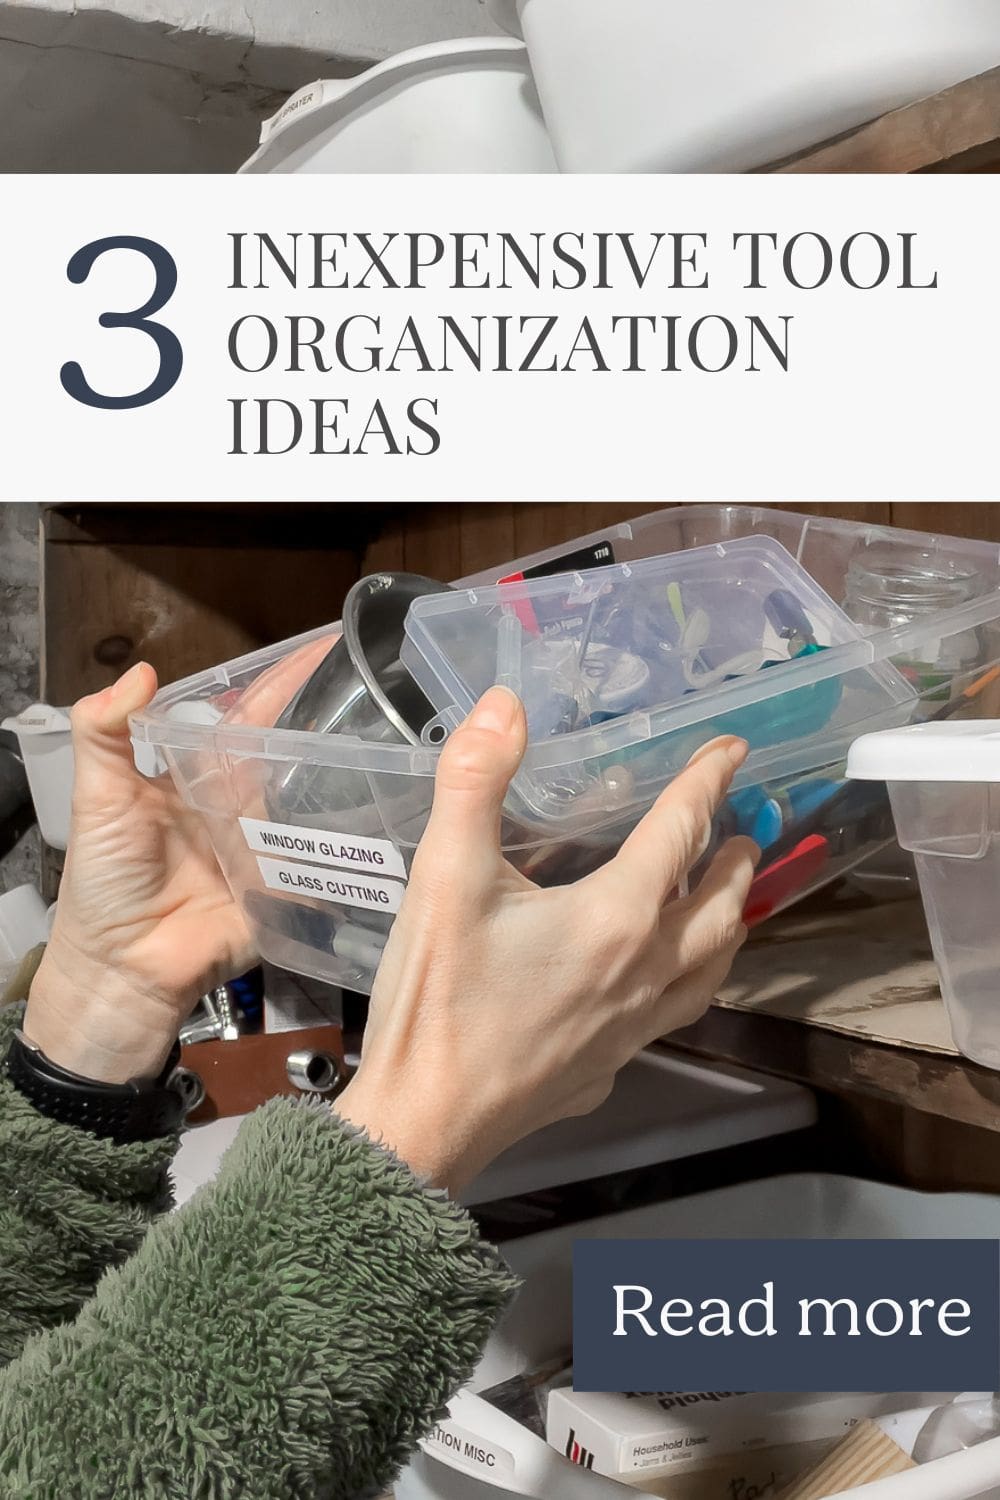 Pin on organize ideas